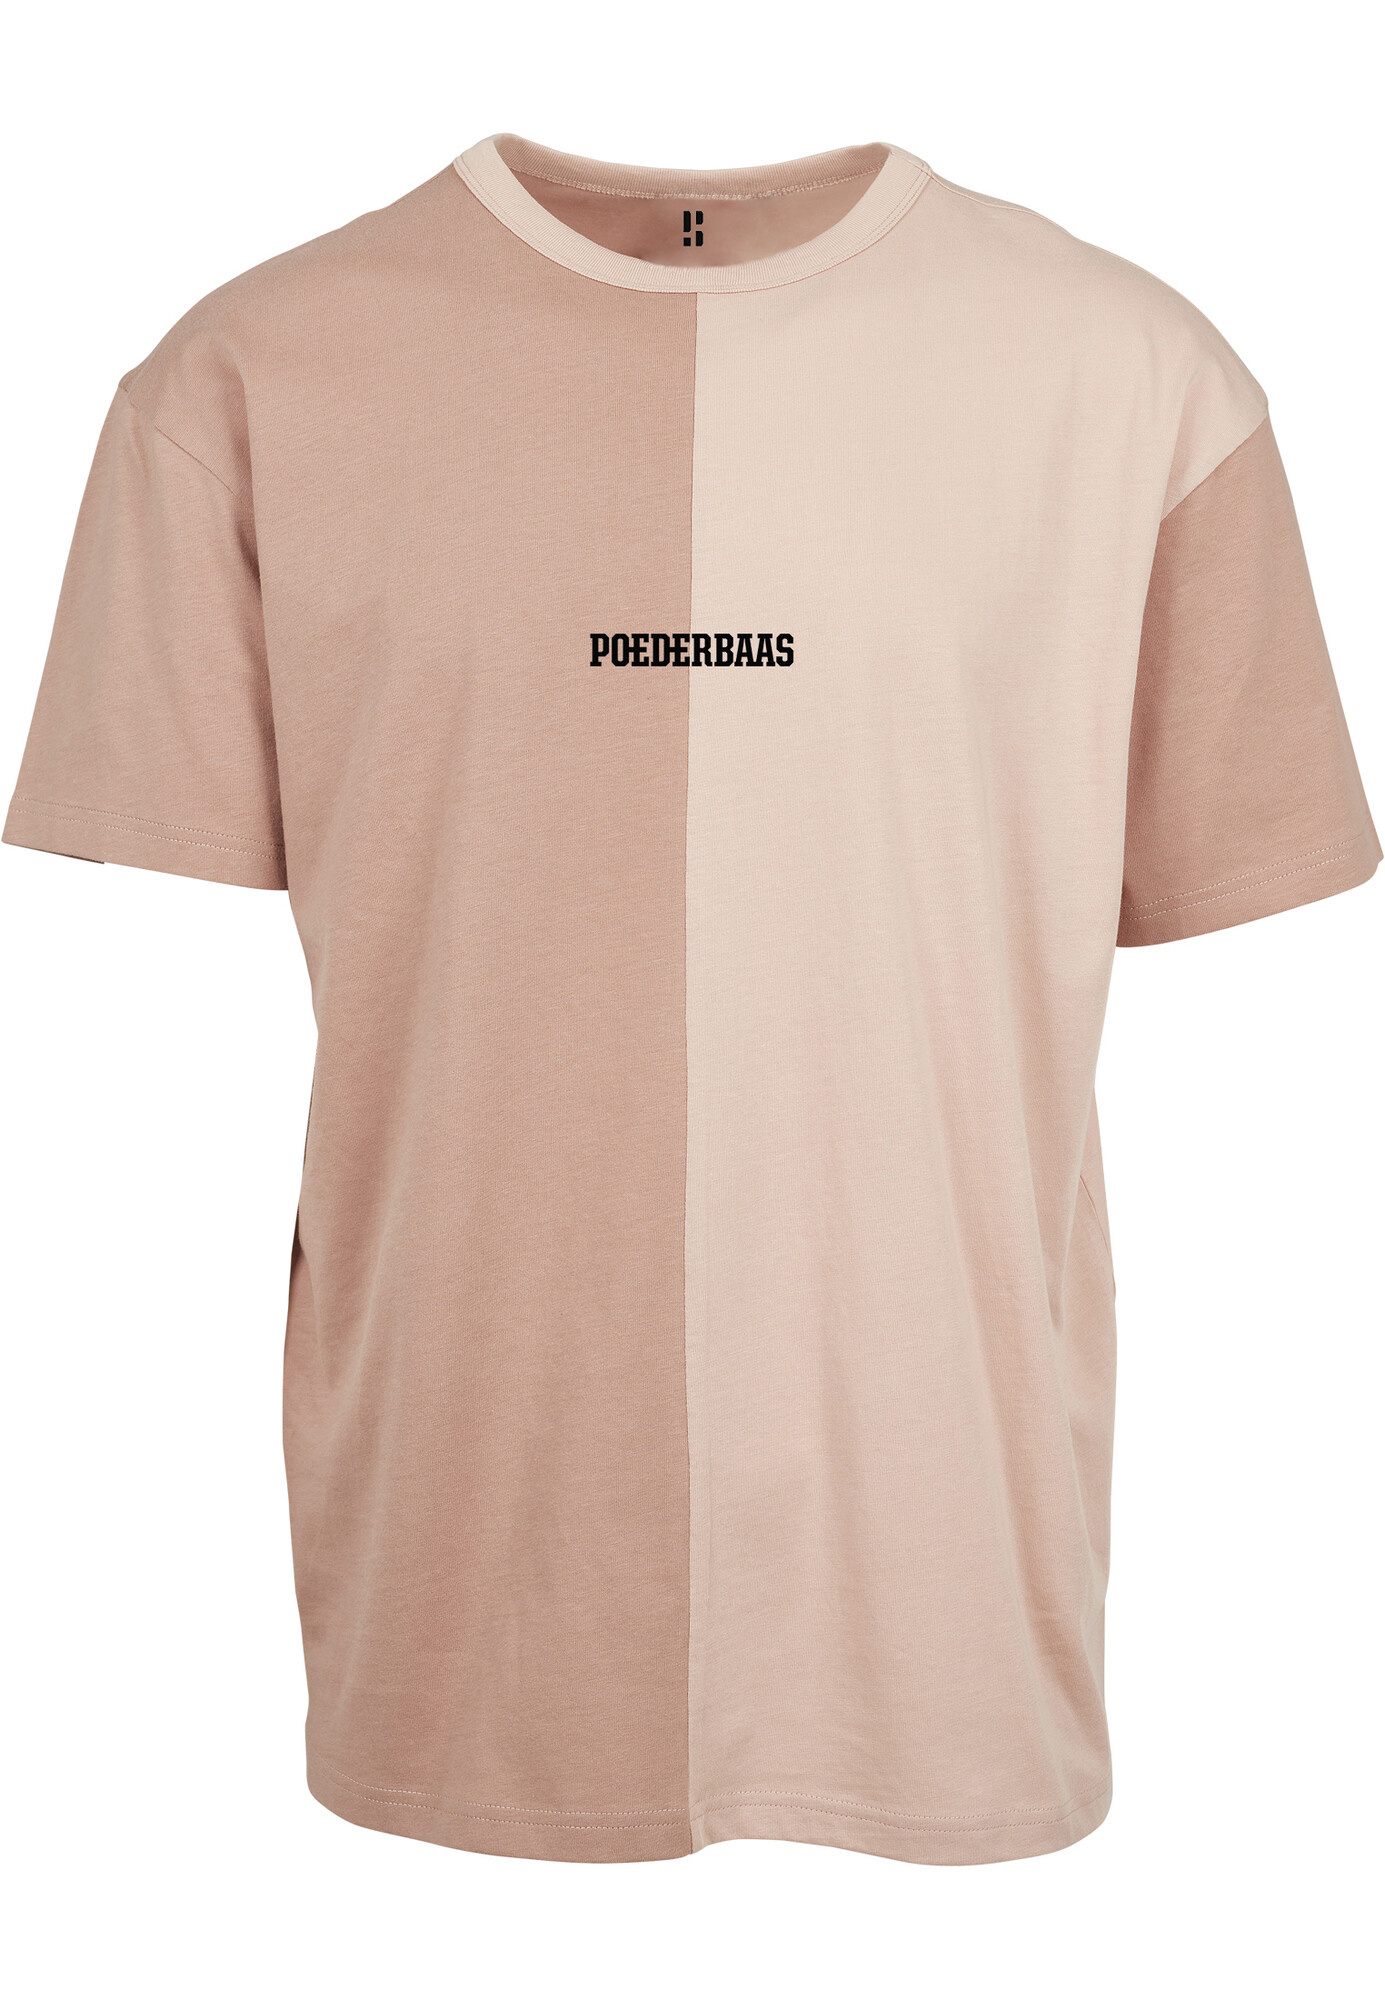 Freeride T-shirt - Pink/Light Pink